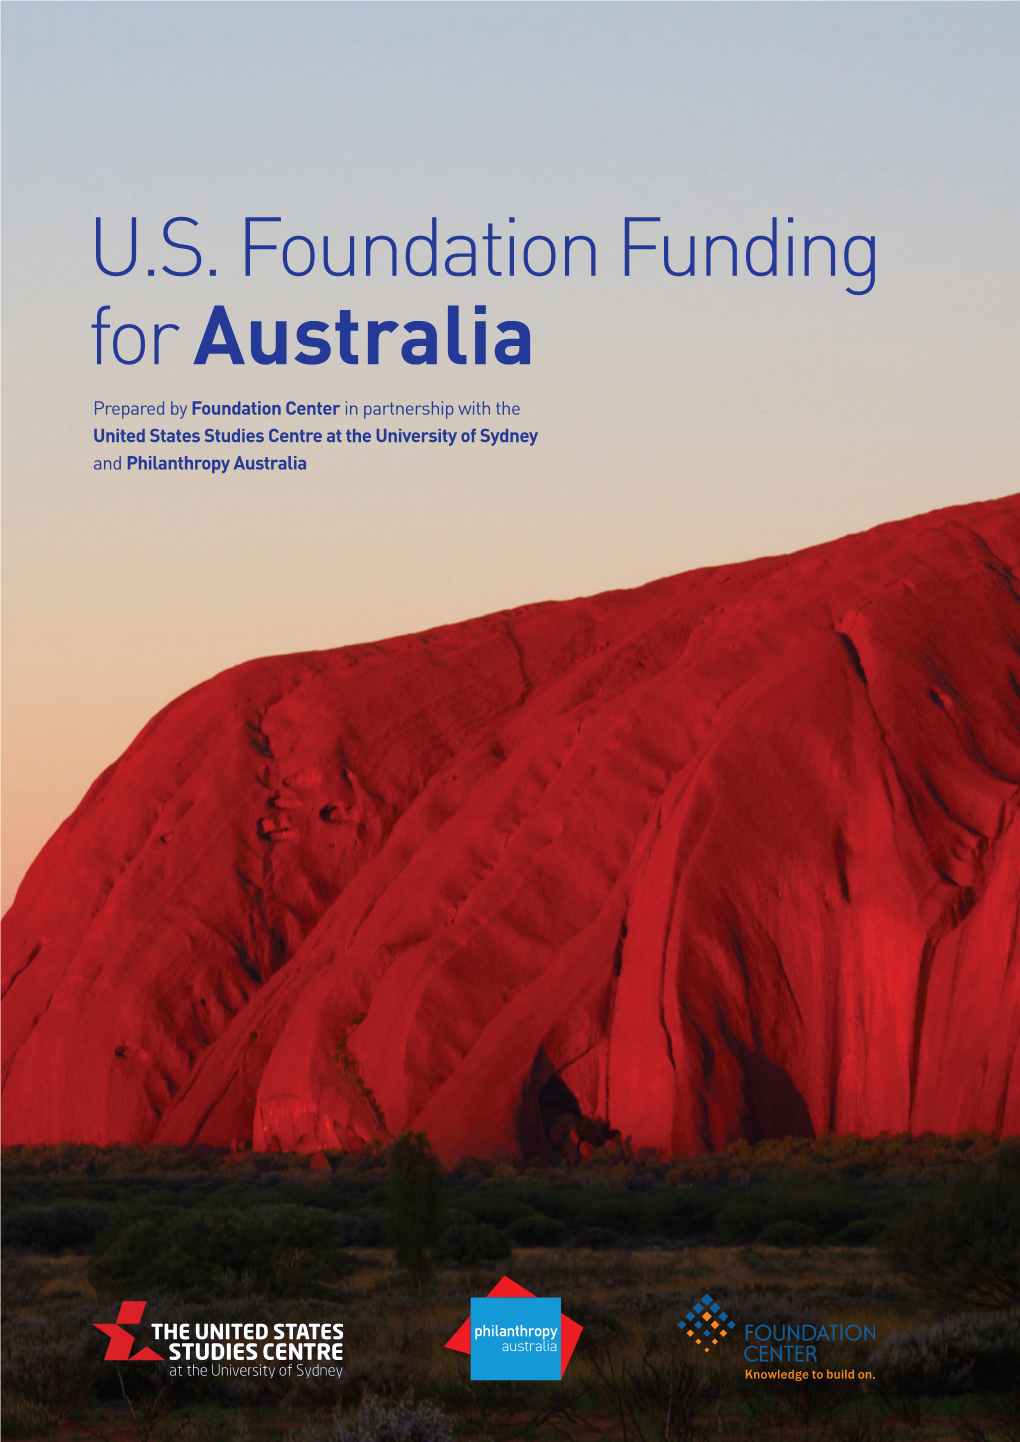 U.S. Foundation Funding for Australia